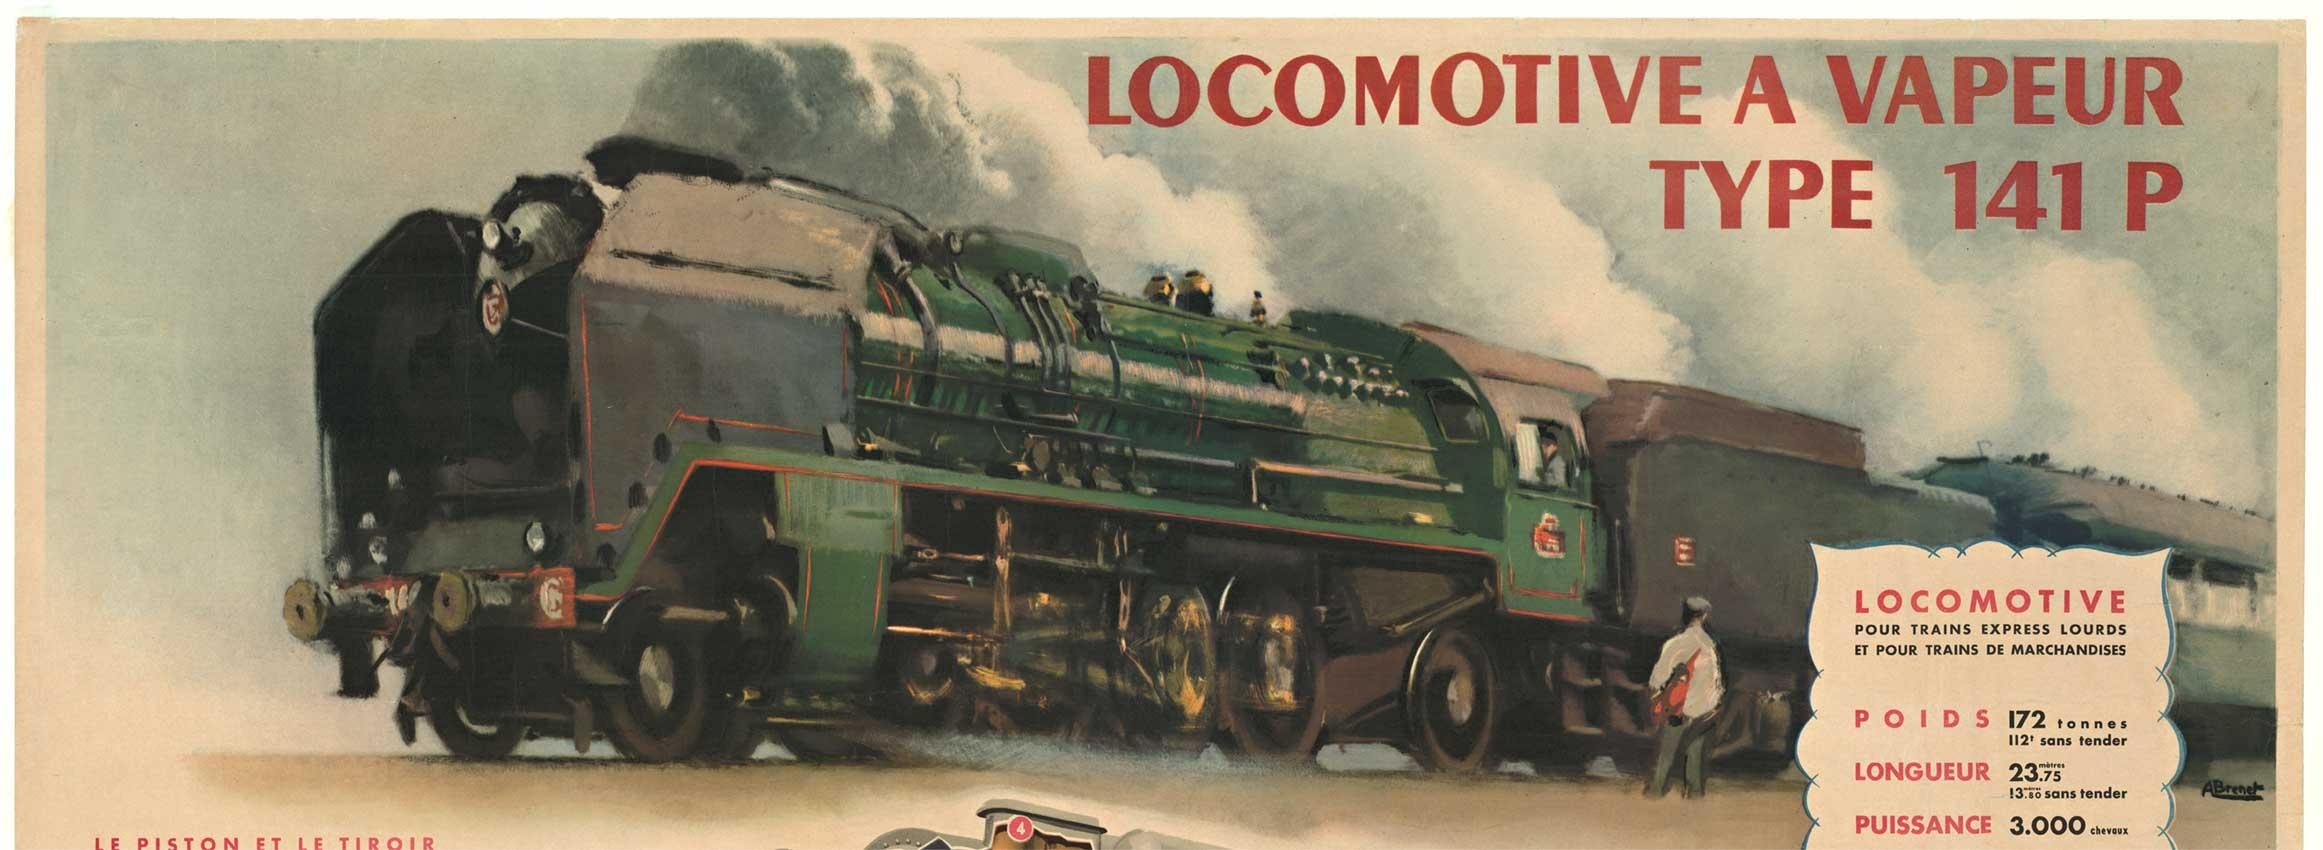 Original-Vintage-Poster „Locomotive a Vapeur, Typoe 141 P“, Eisenbahn im Angebot 2